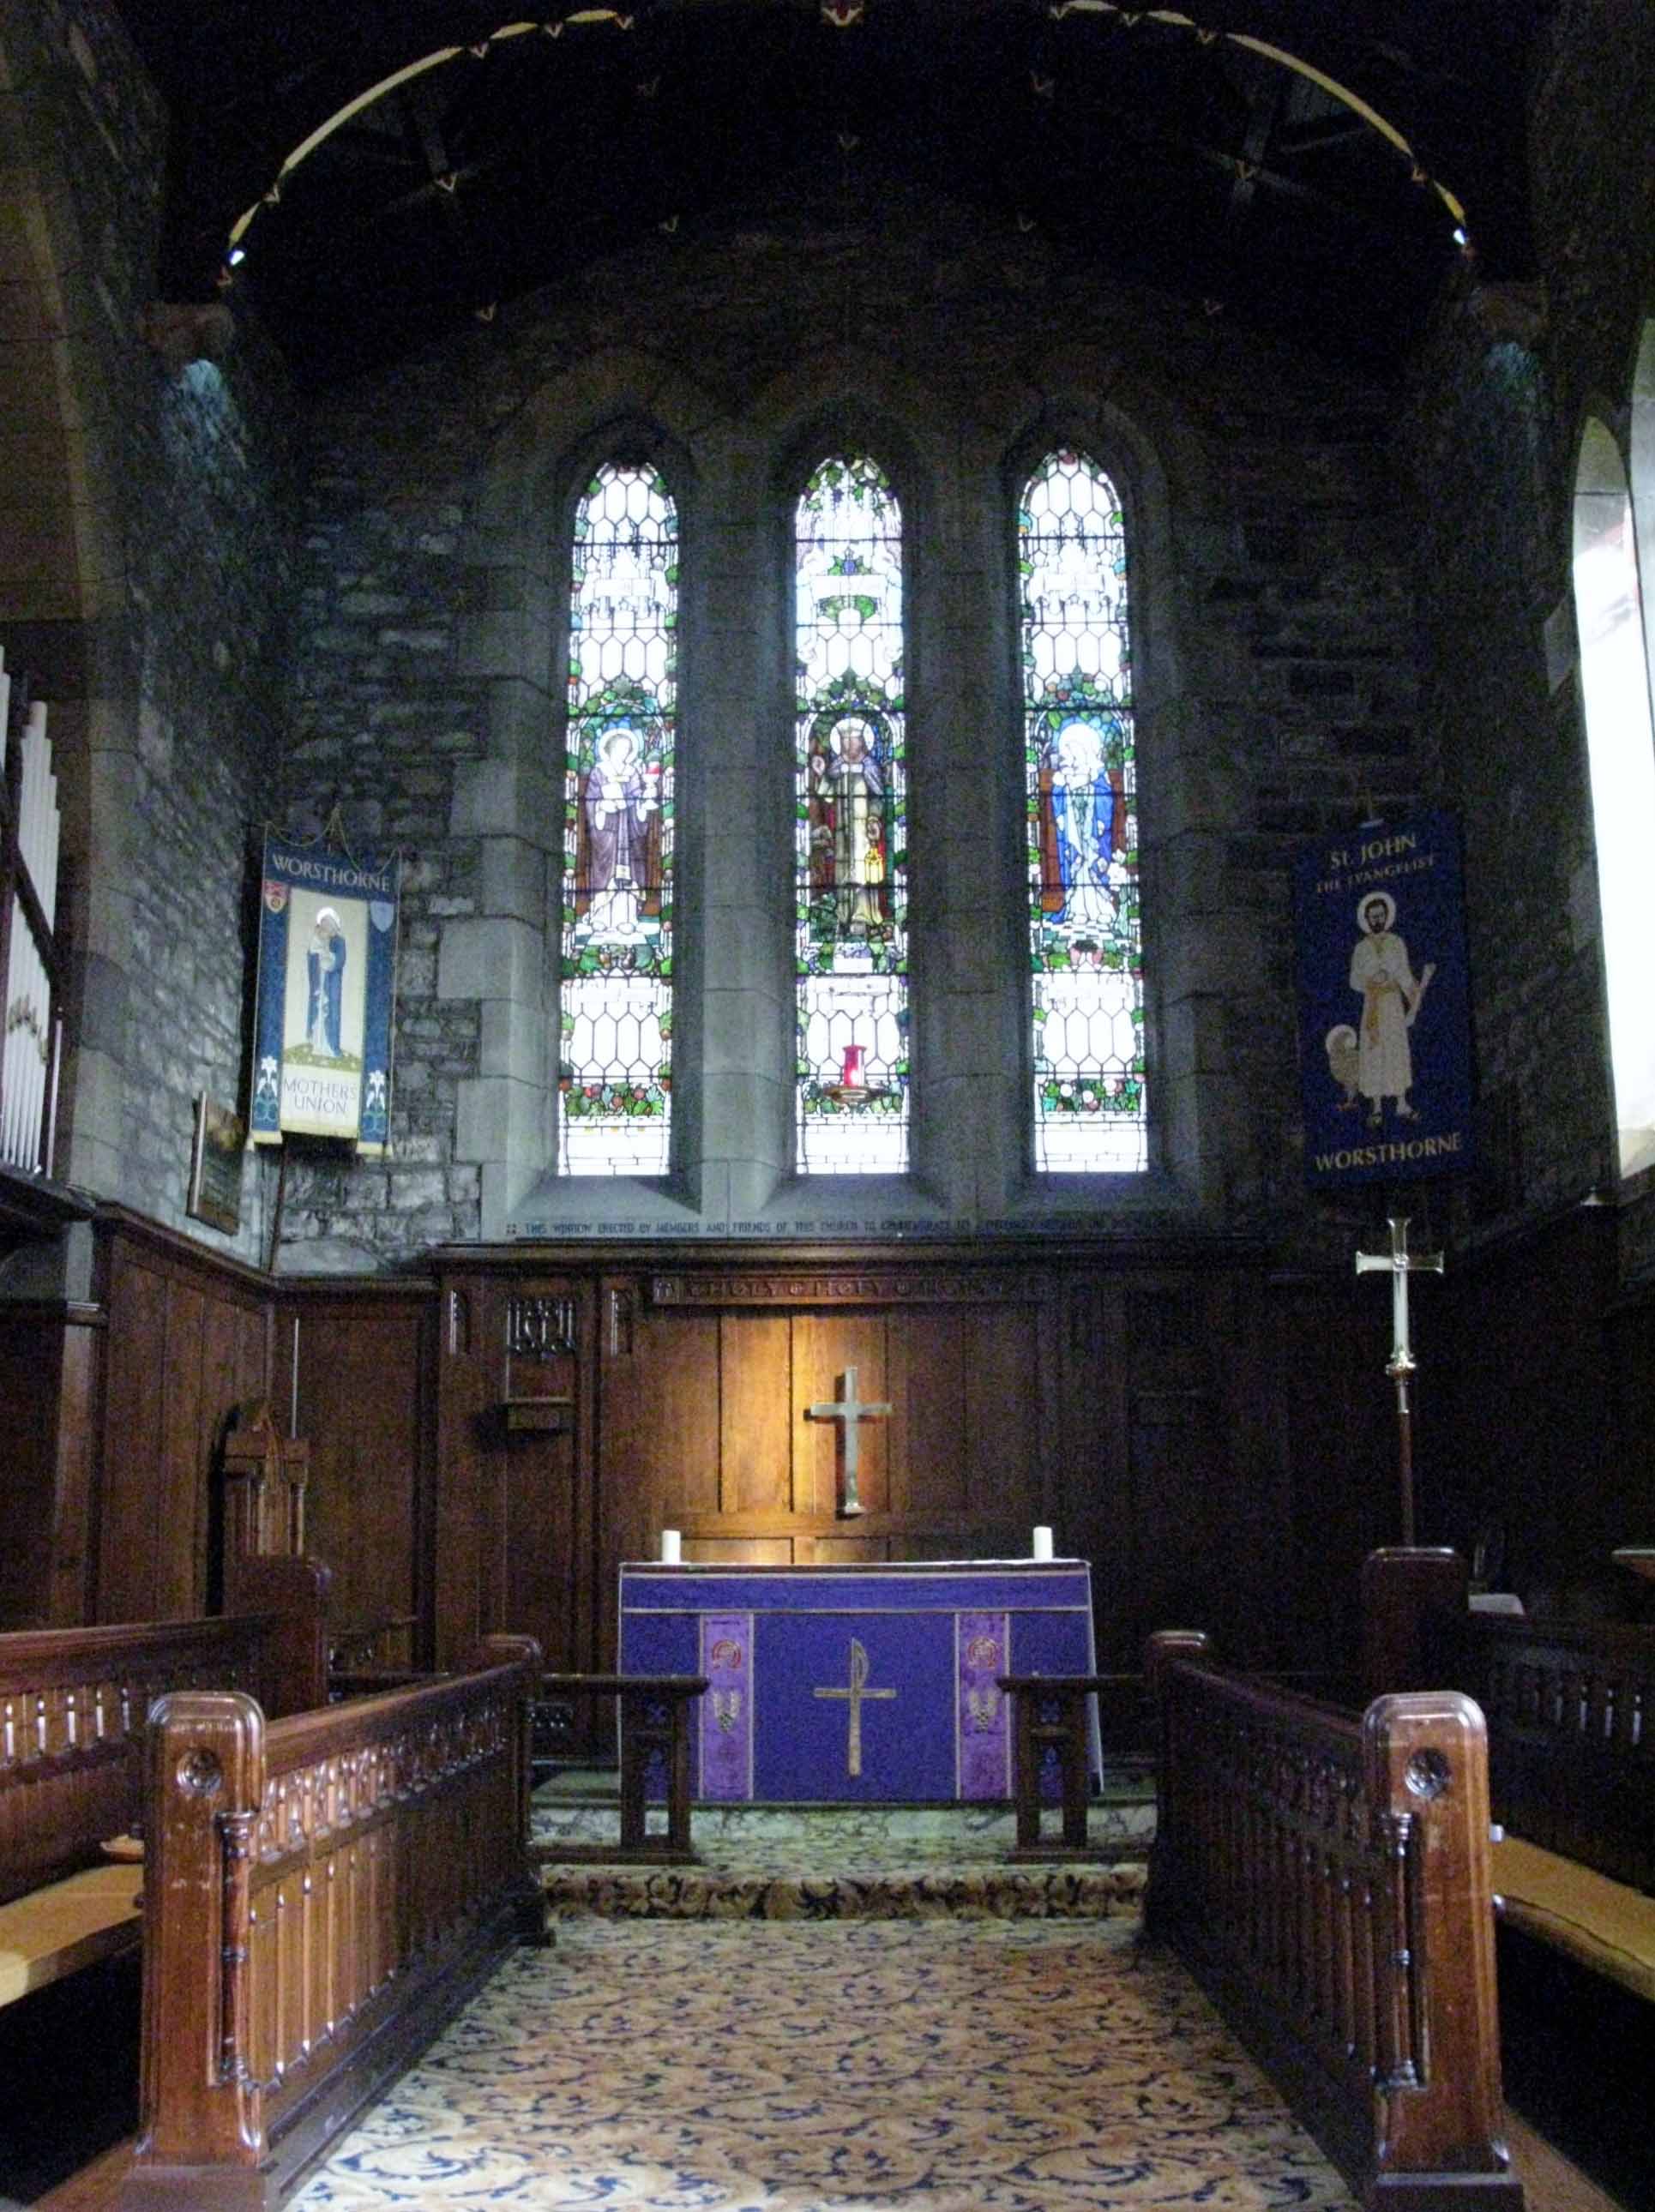 Interior of St John the Evangelist, Worsthorne